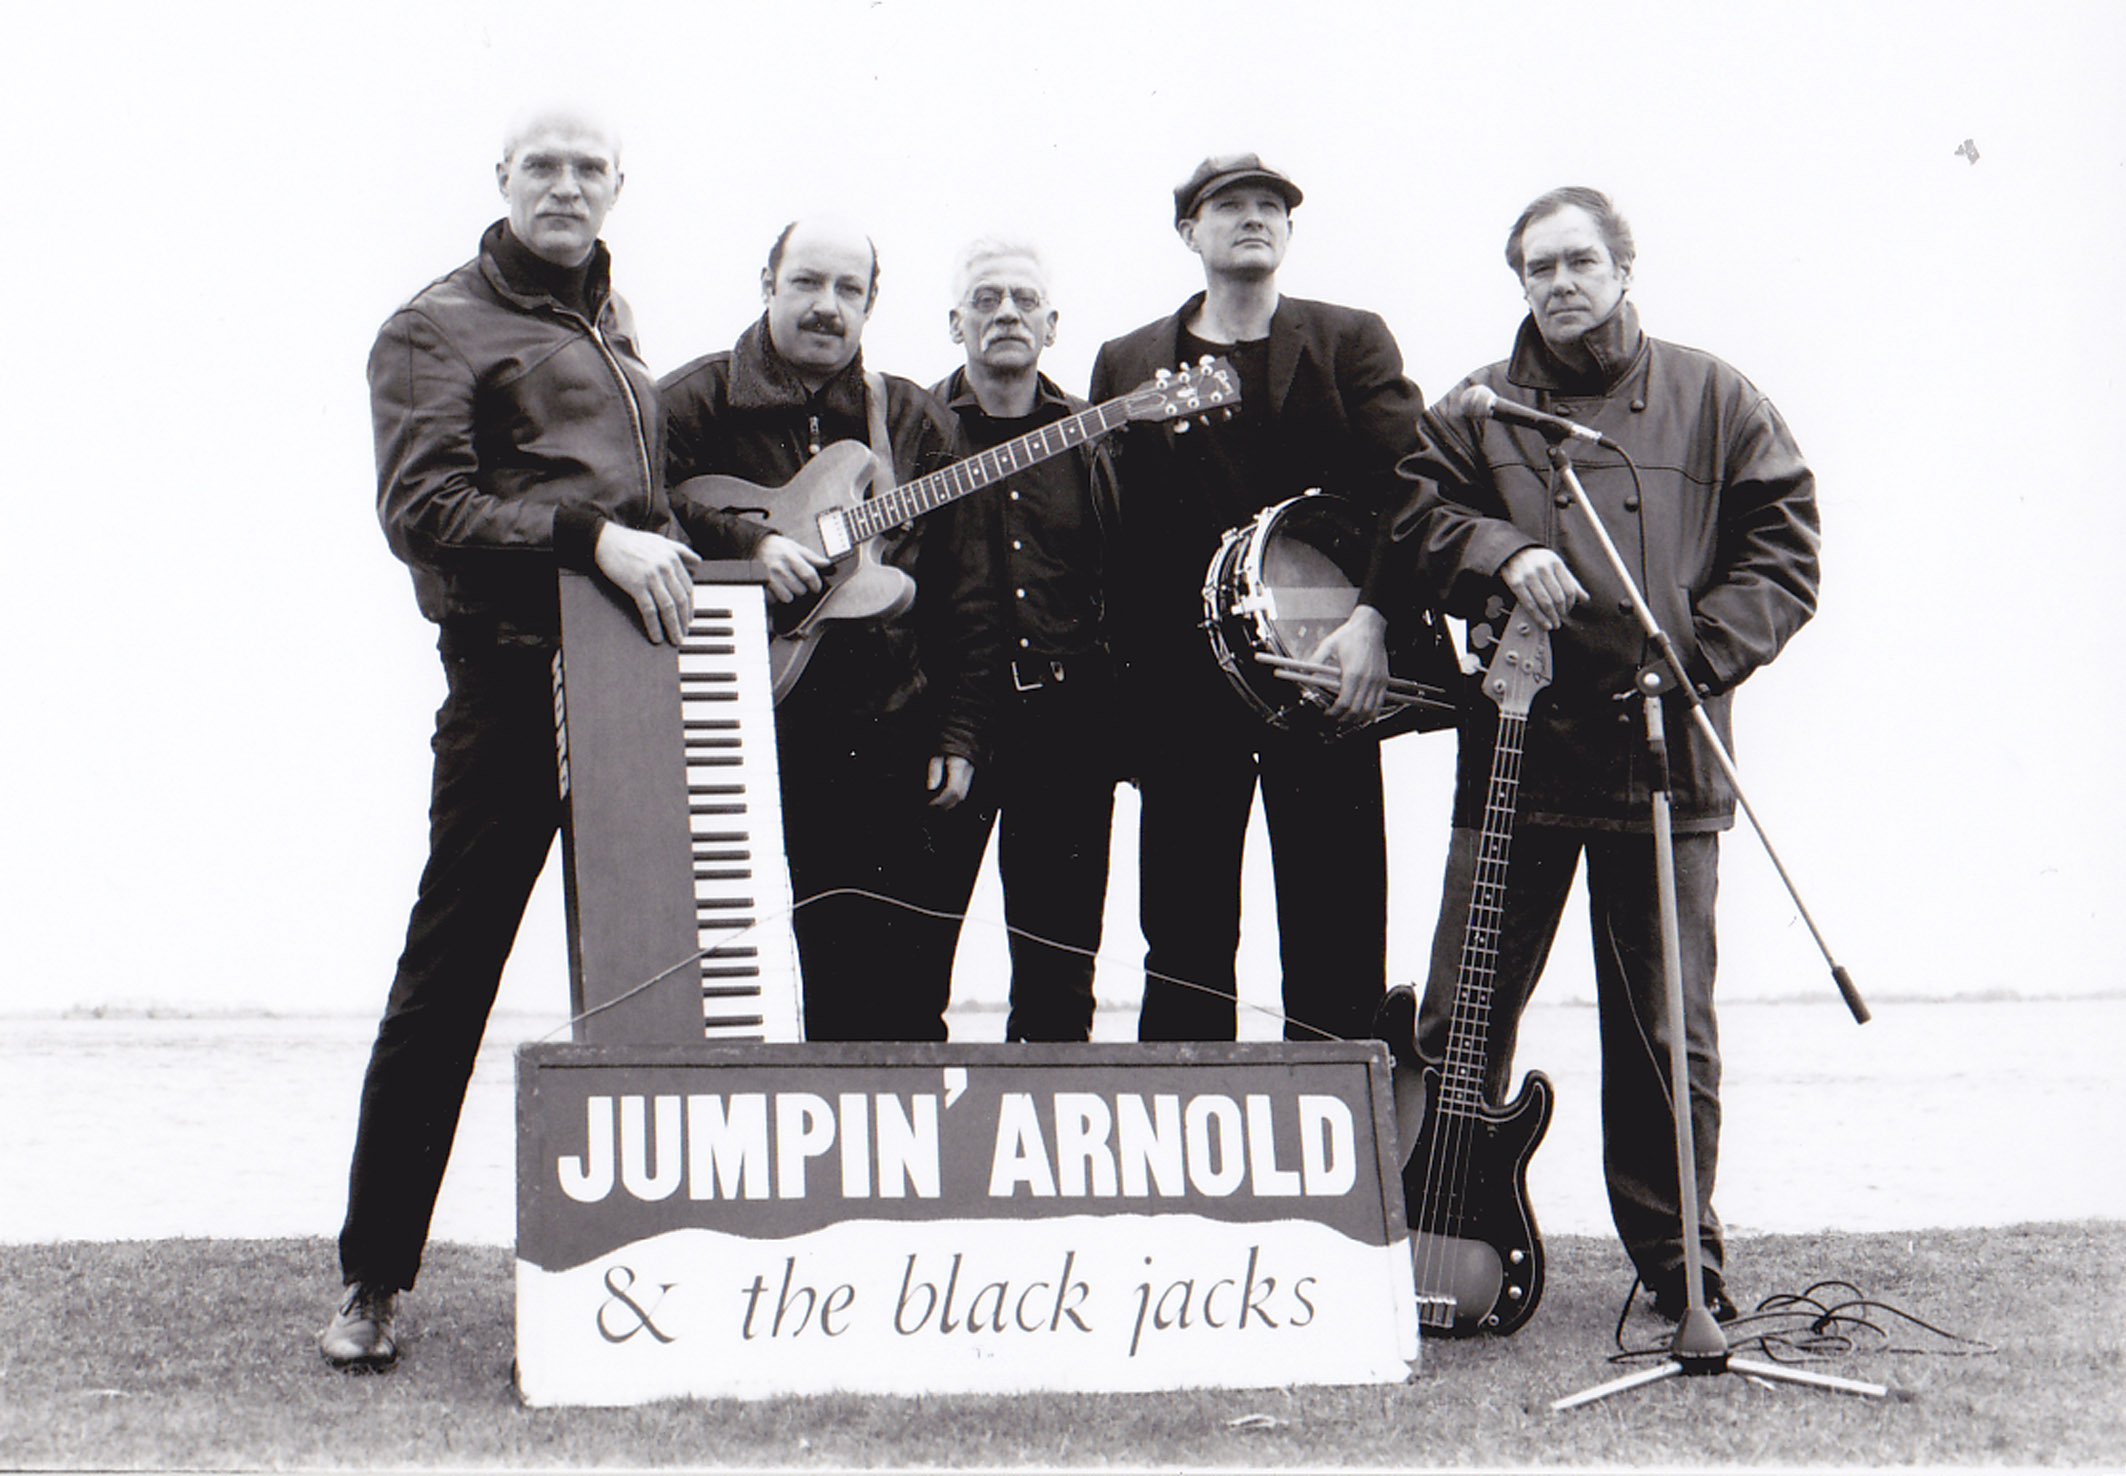 5) Jumping Arnold & The Blackjacks